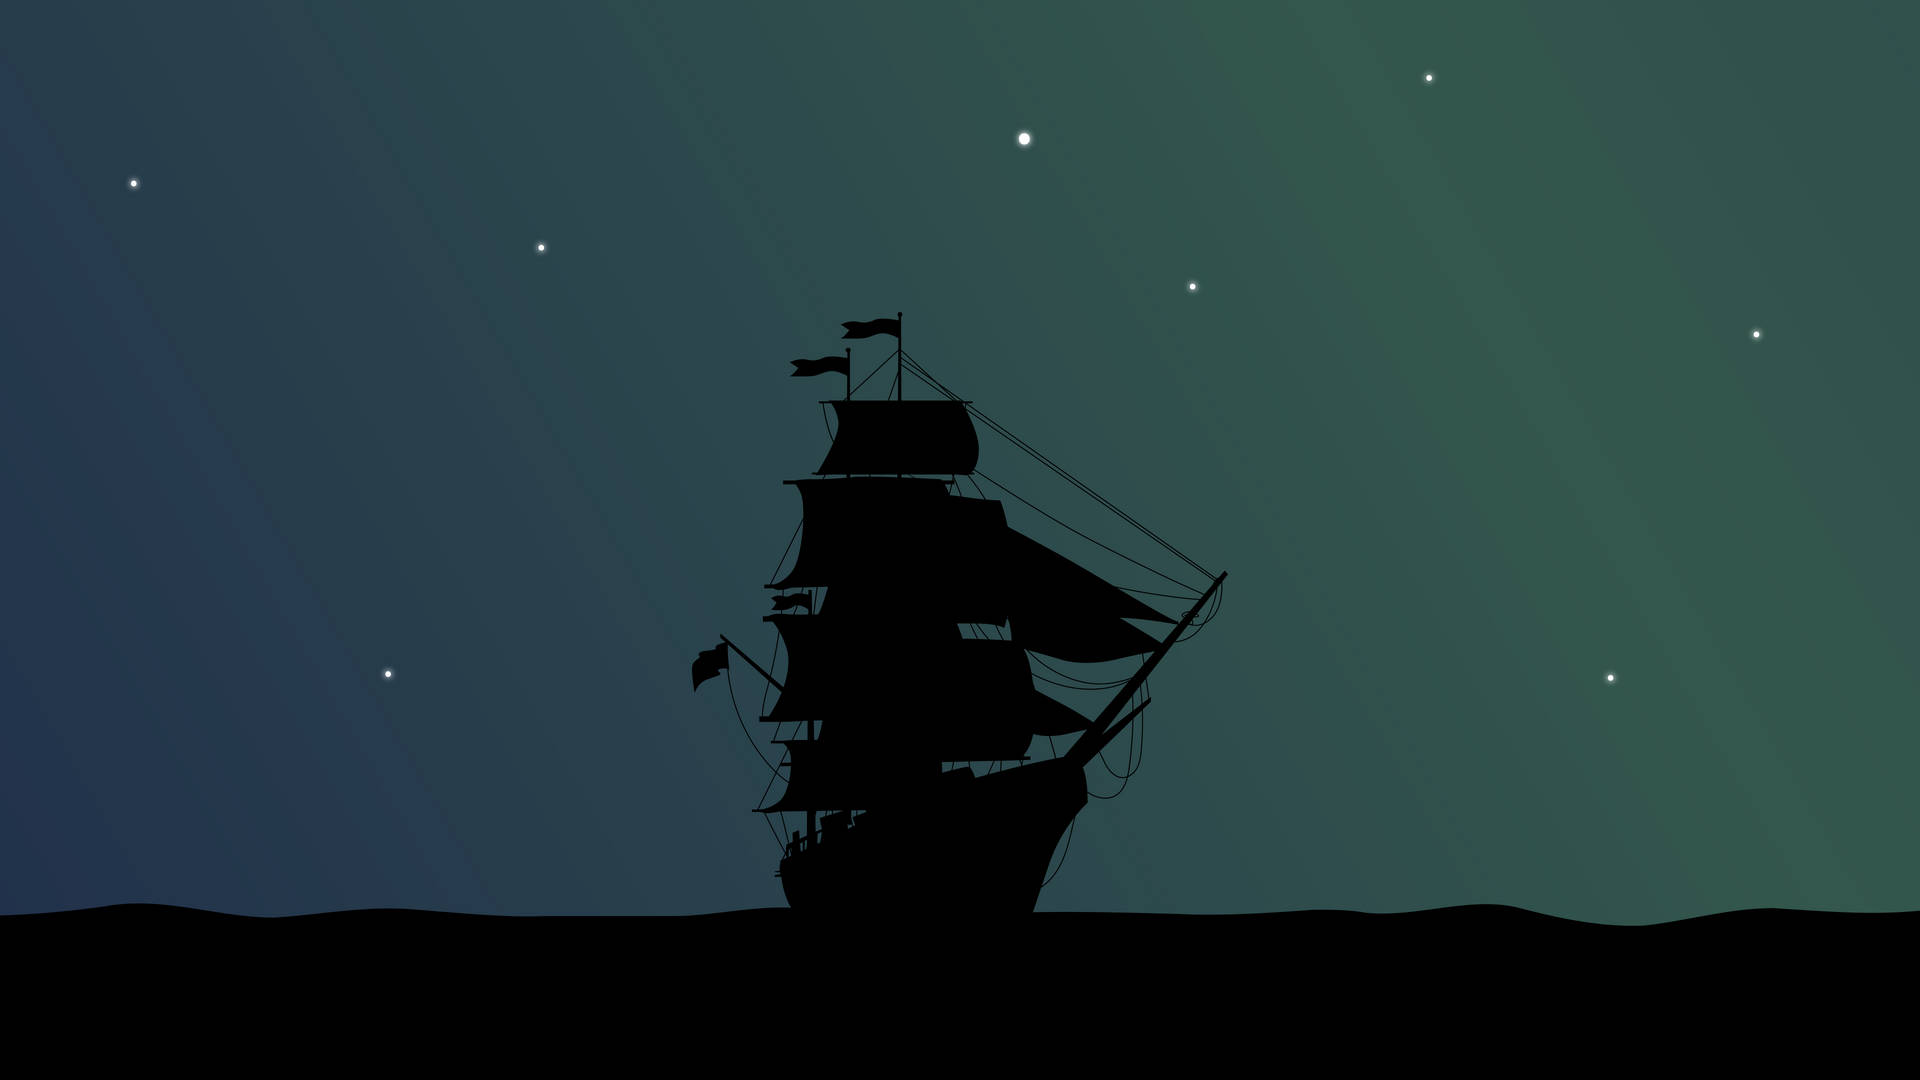 Pirate Ship Silhouette Art Background